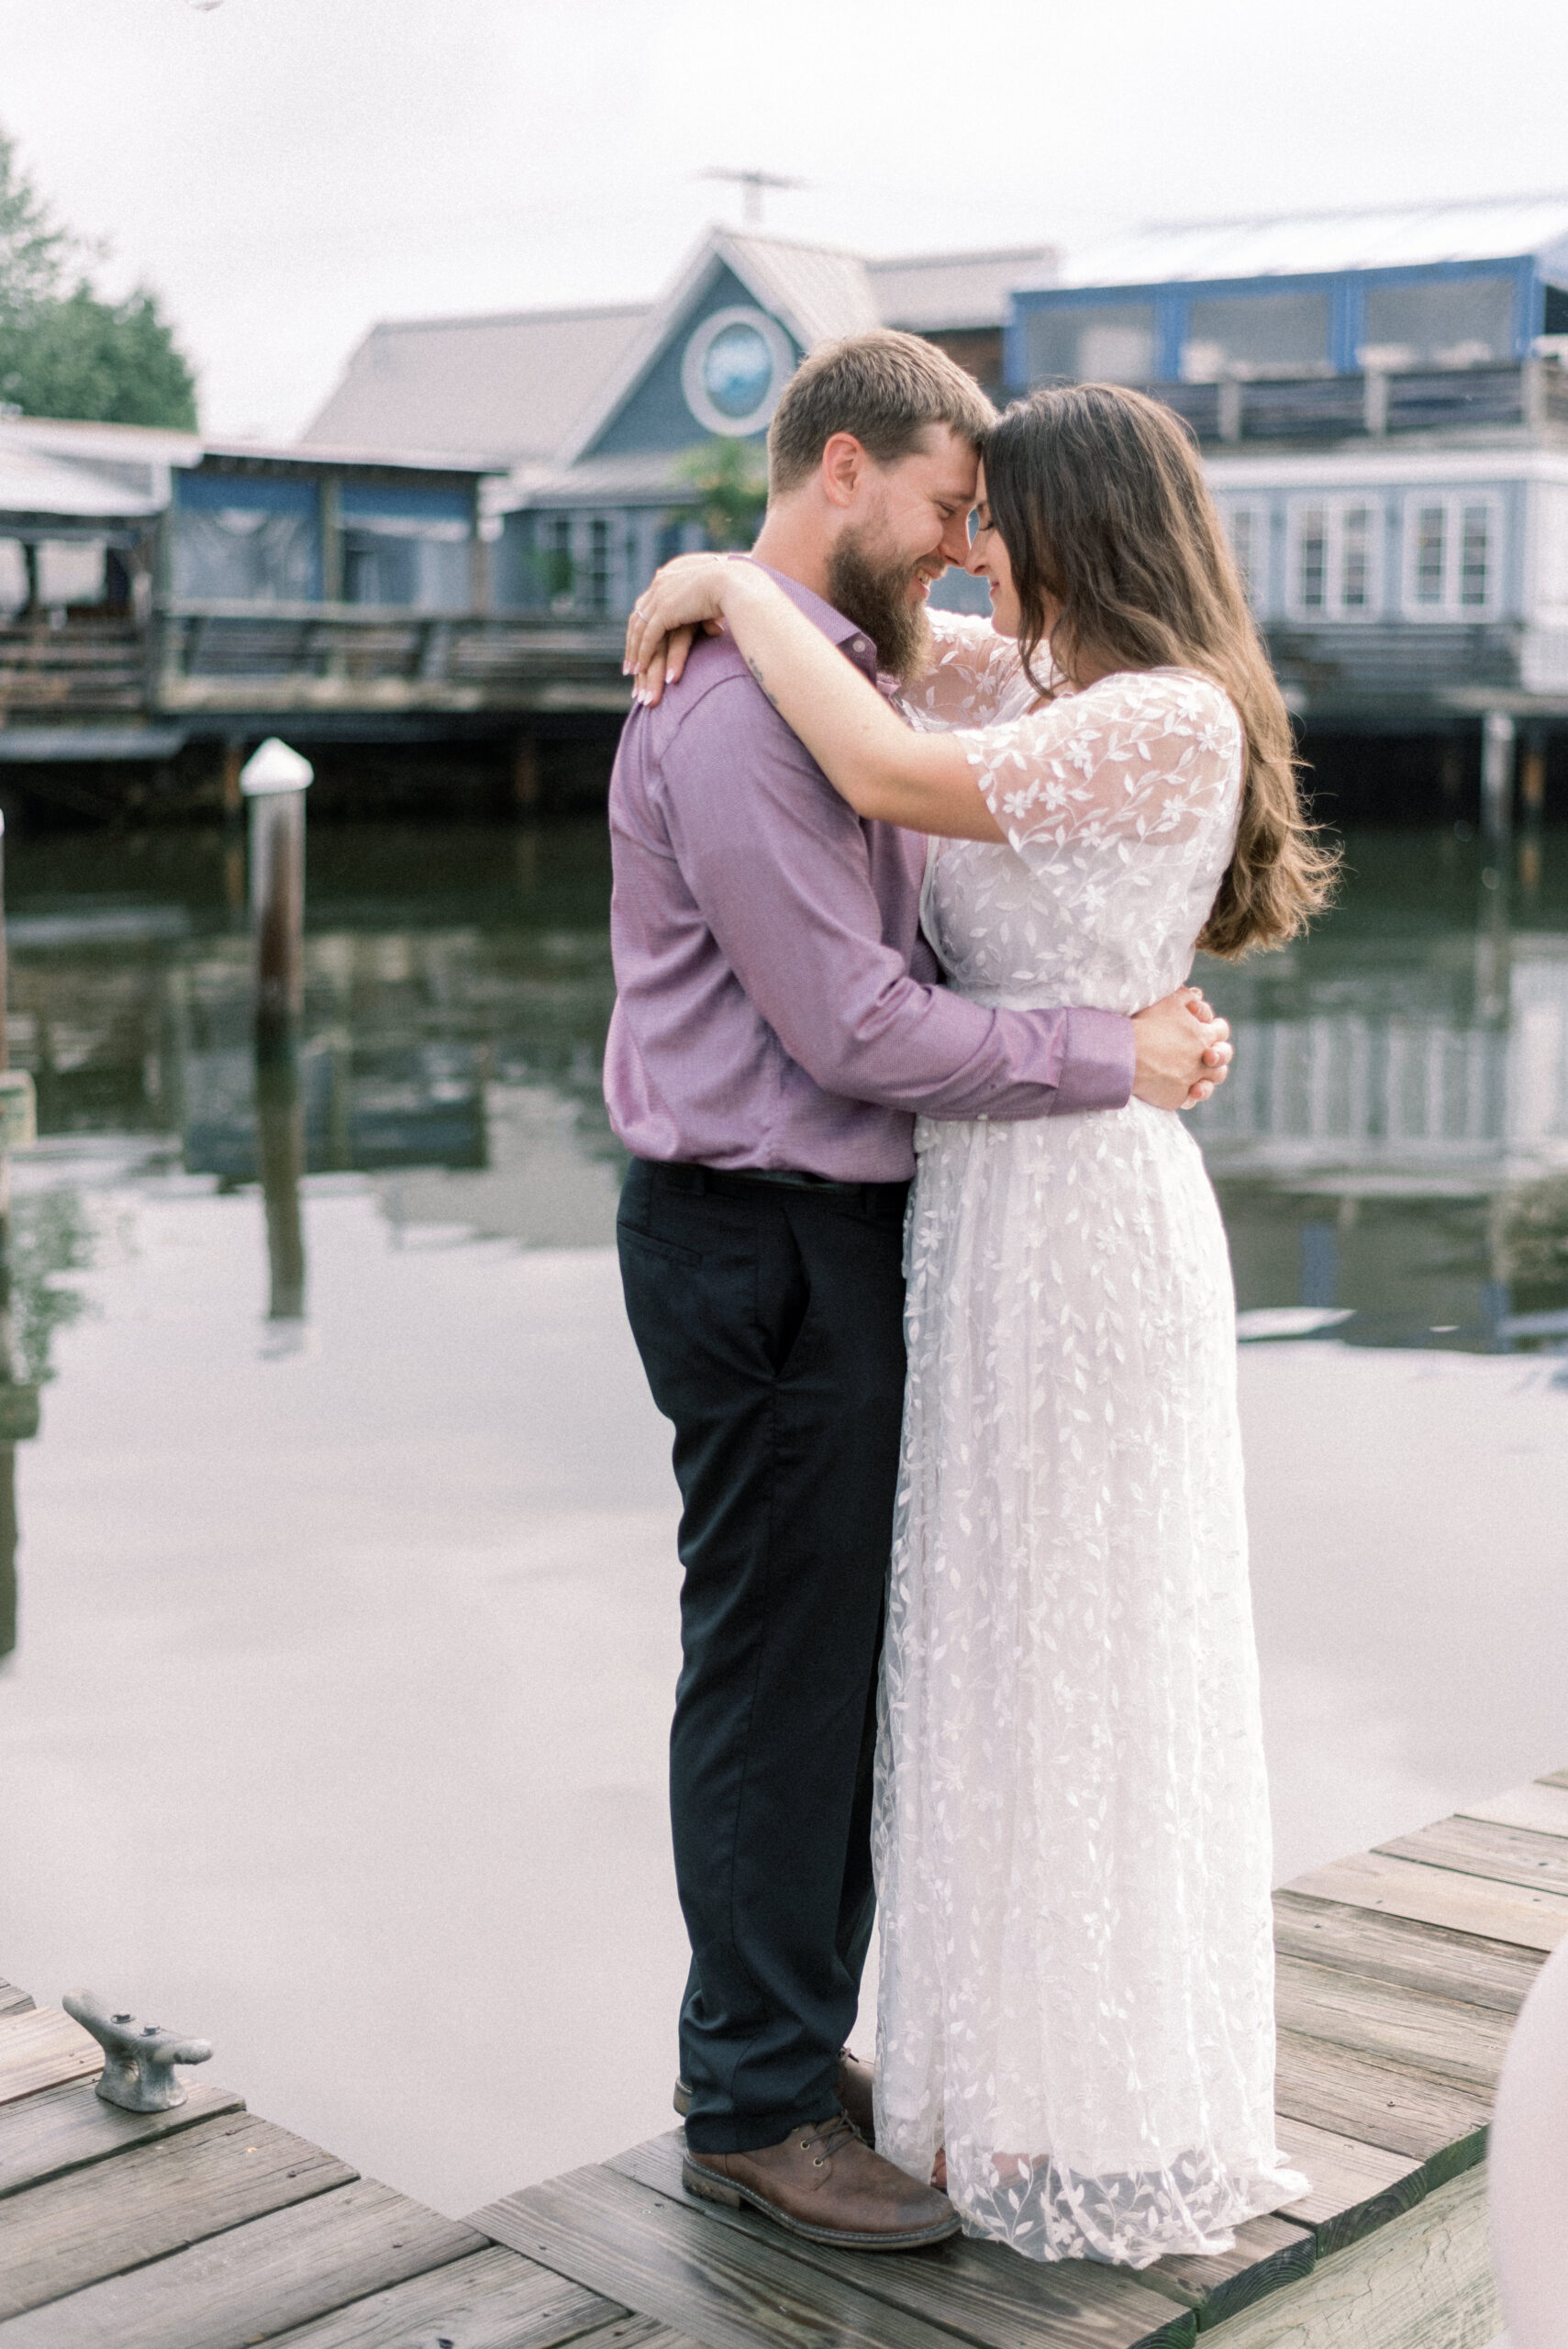 Pennsylvania wedding photographer captures couple dancing on dock together